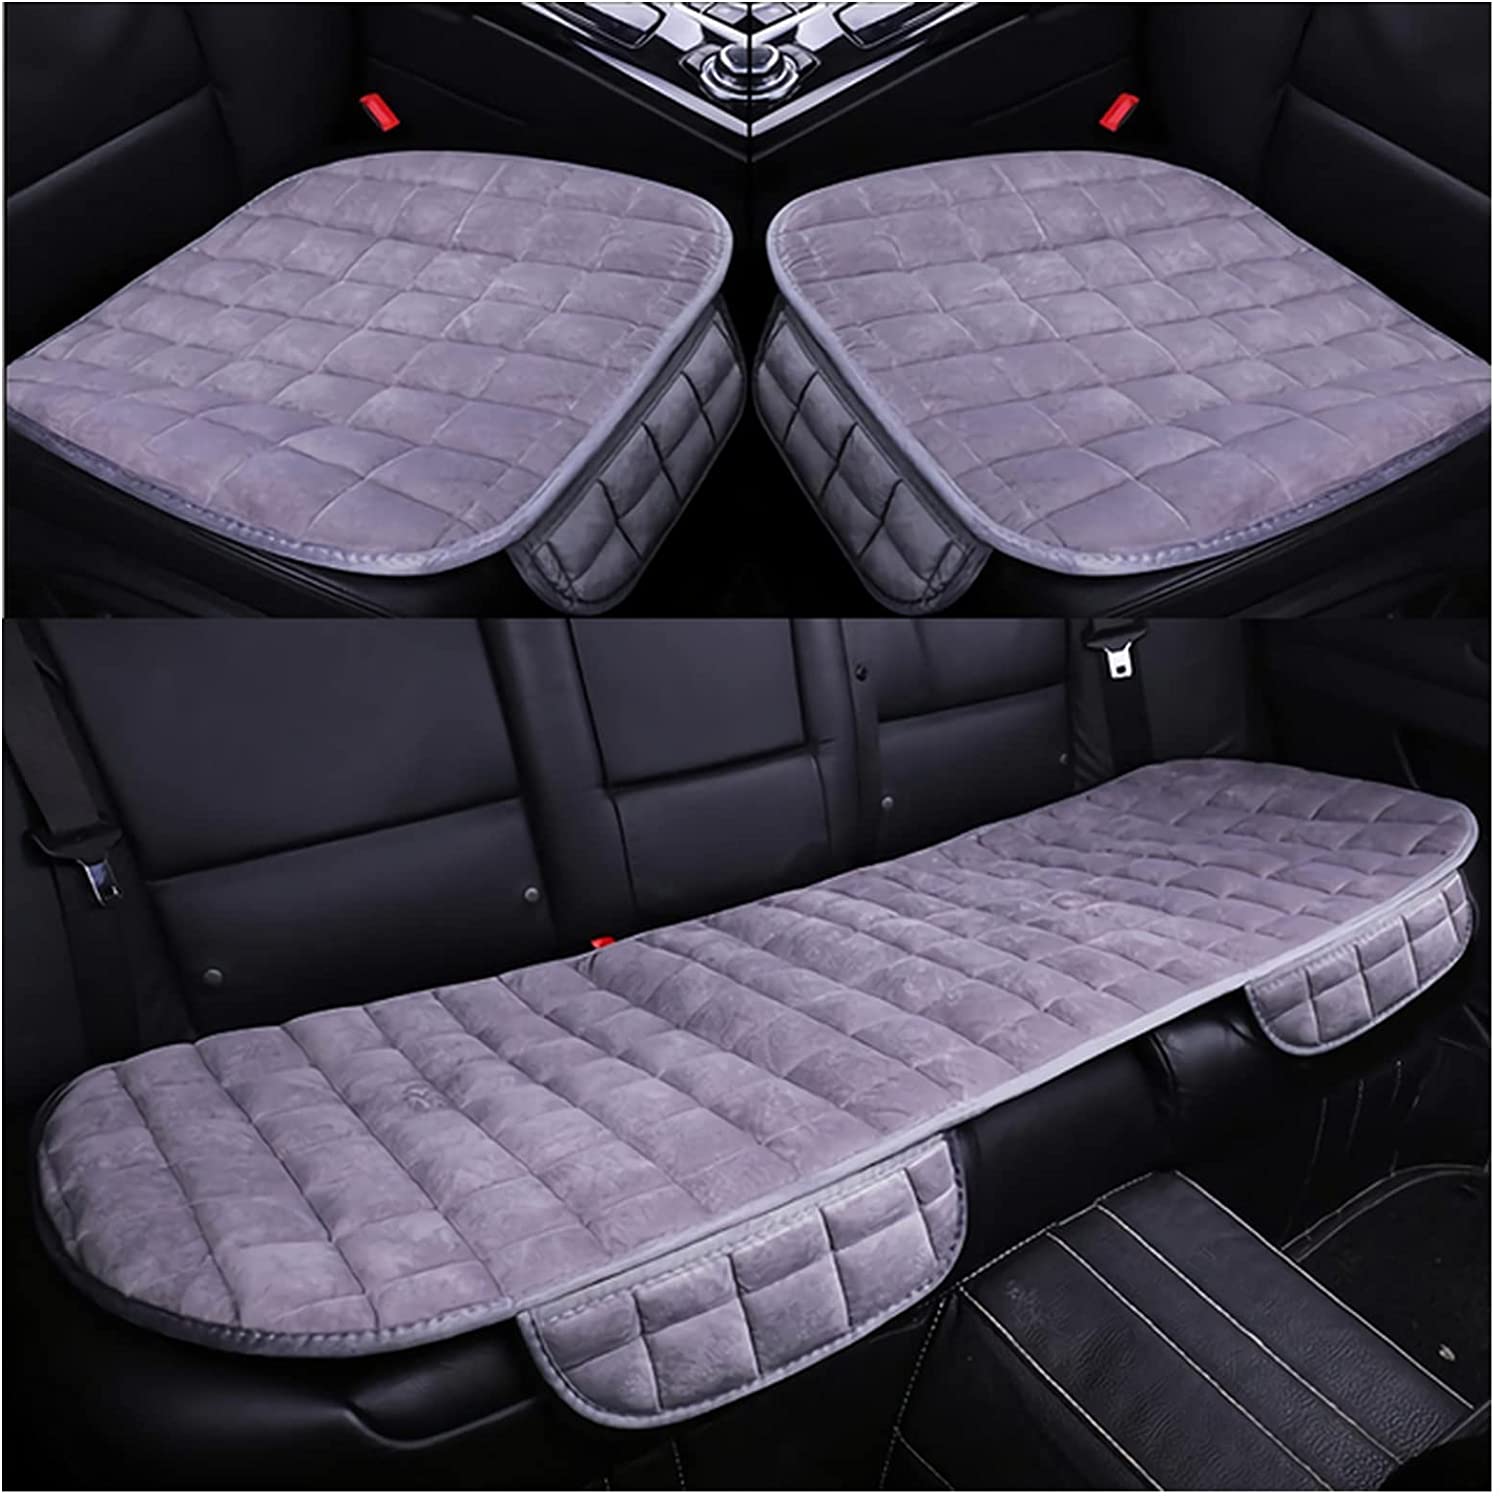 bamutech Seat Cushion Car Seat Cover Fit Truck SUV Van Front Rear Flake Cloth Cushion Non-Slip Winter Car Protector Mat Pad Keep Warm Universal Seat Cushion Chair (Size: Grey 3pcs)